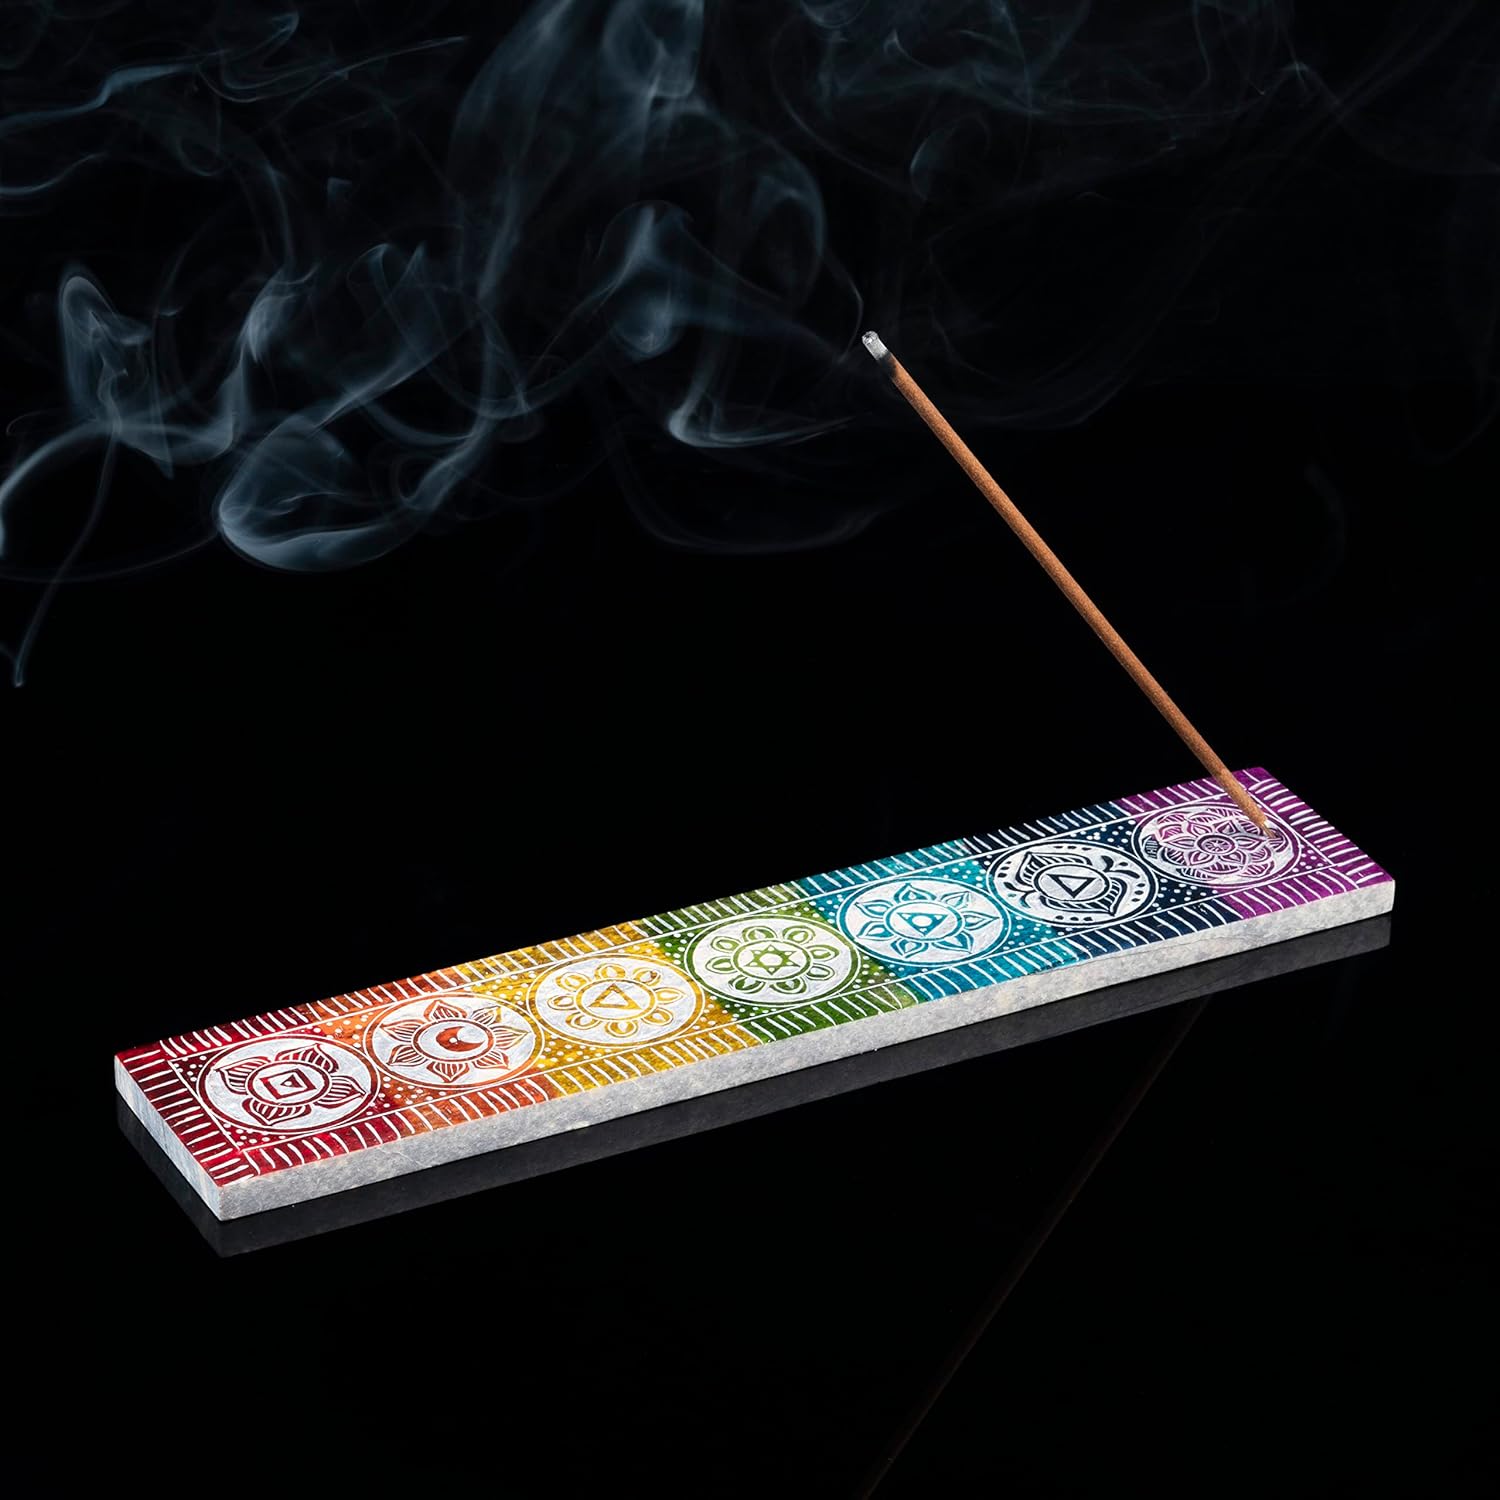 Crocon Soapstone Incense Tray for Sticks Diwali Décor Incense Stick Holder - Incense Burner - Ash Catcher - Handmade Seven Chakra  Line Design - Ideal for Aromatherapy, Meditation, Decor 10x2.5 Inch